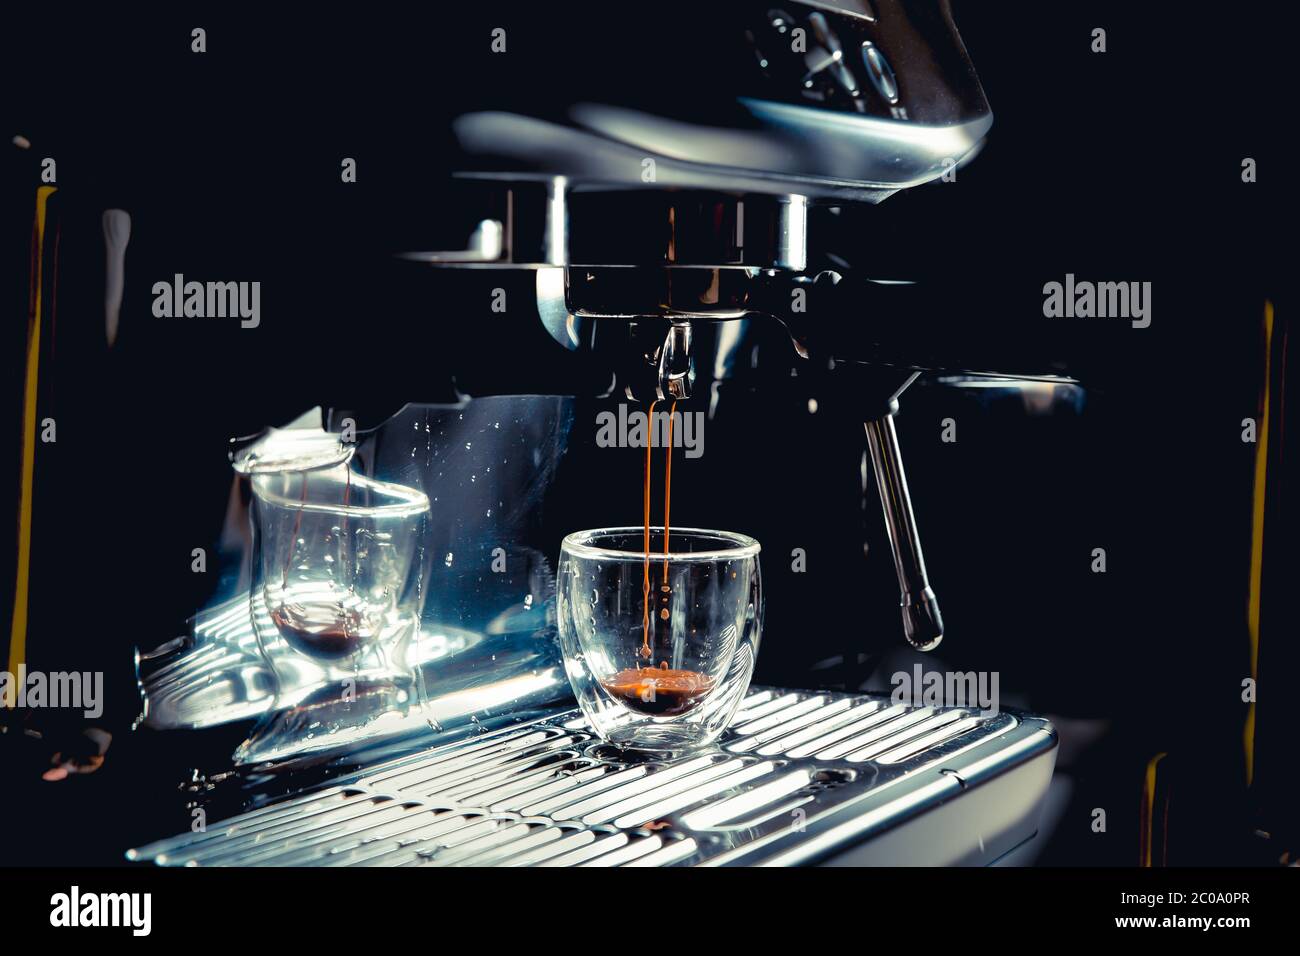 https://c8.alamy.com/comp/2C0A0PR/dark-coffee-drops-dripping-in-a-transparent-glass-espresso-cup-on-a-manual-espresso-machine-with-copy-space-close-up-2C0A0PR.jpg